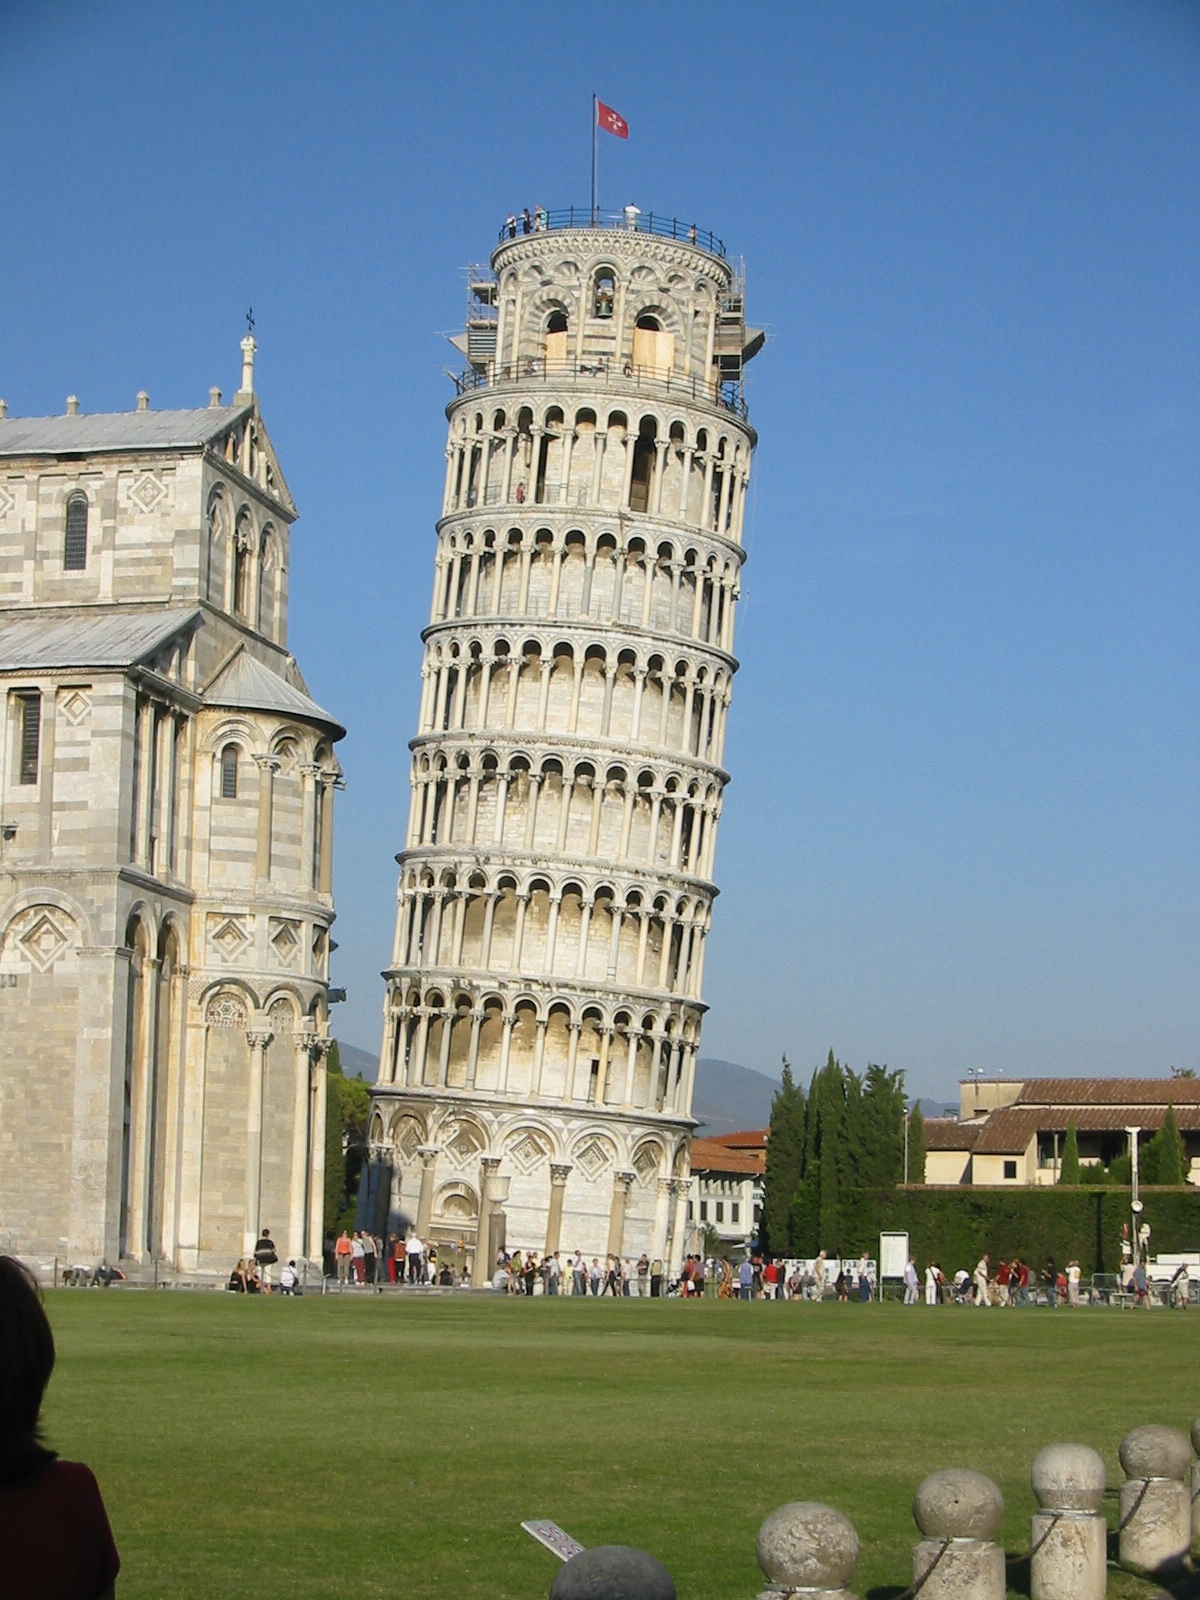 Travel Memories with Leaning Tower of Pisa - Gamesforlanguage.com